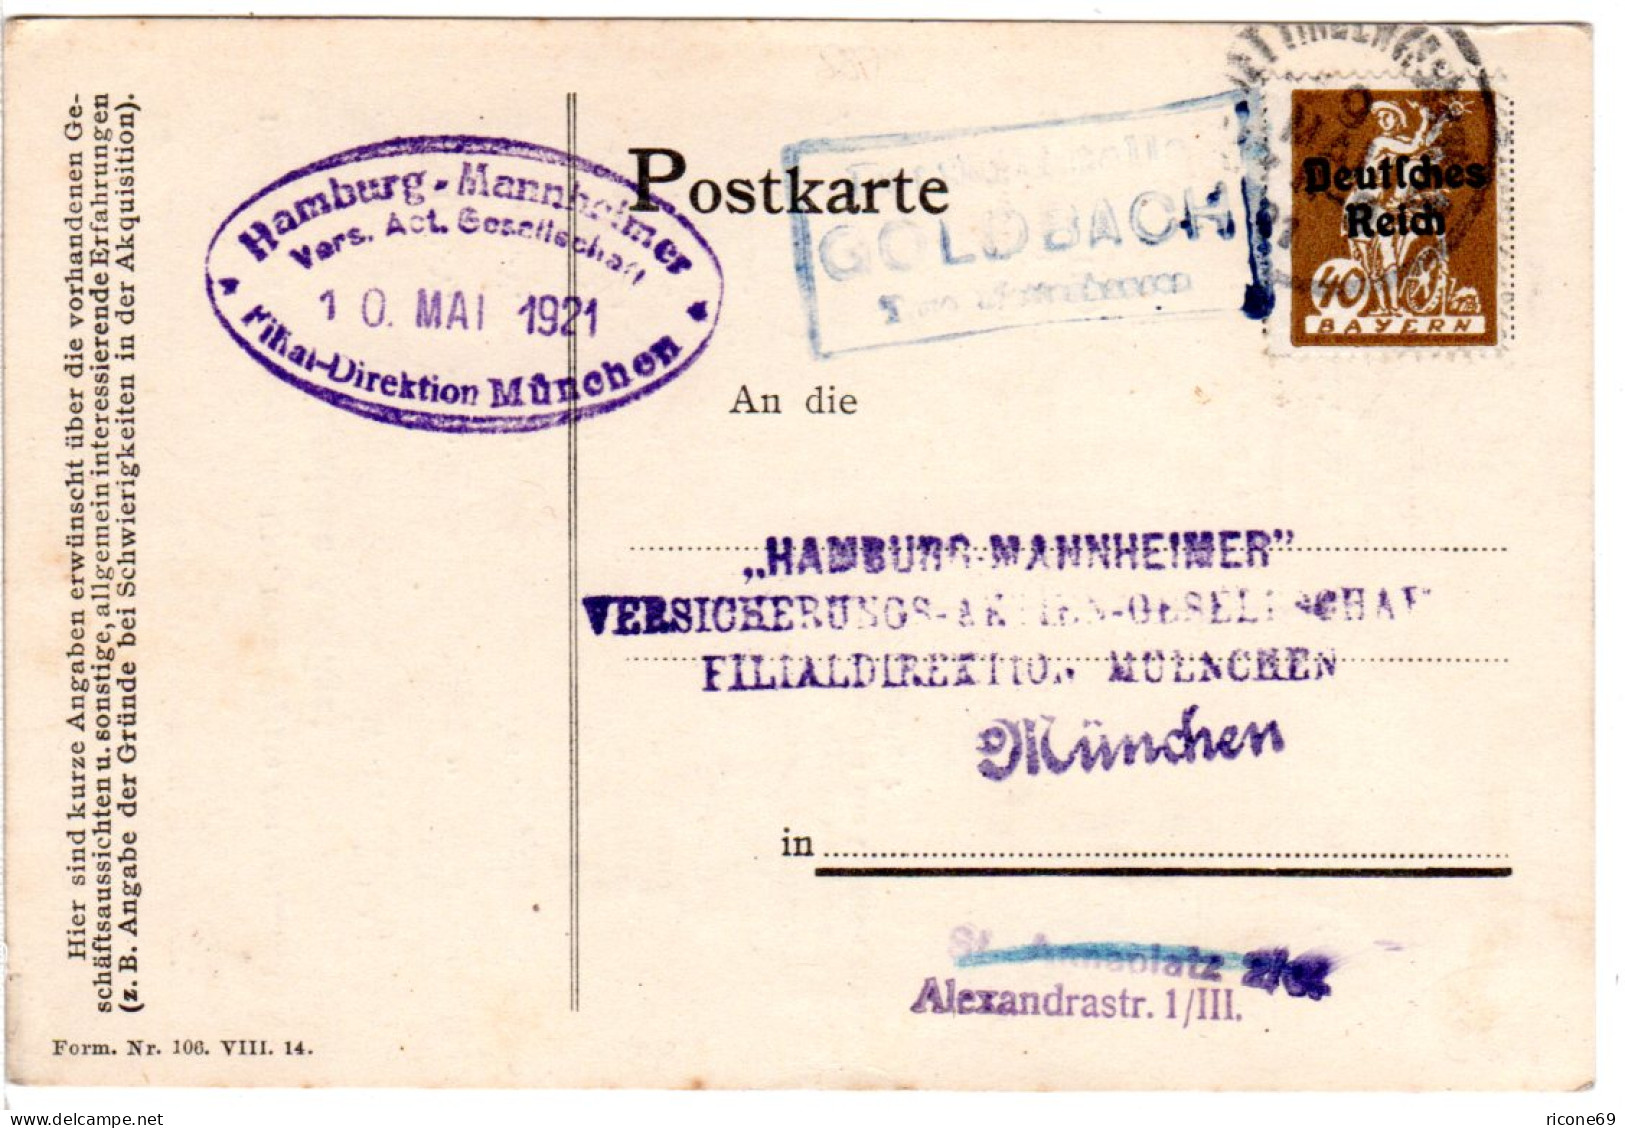 DR 1921, Bayern Posthilfstelle GOLDBACH Taxe Wellenhausen Auf Karte M. 40 Pf.  - Brieven En Documenten